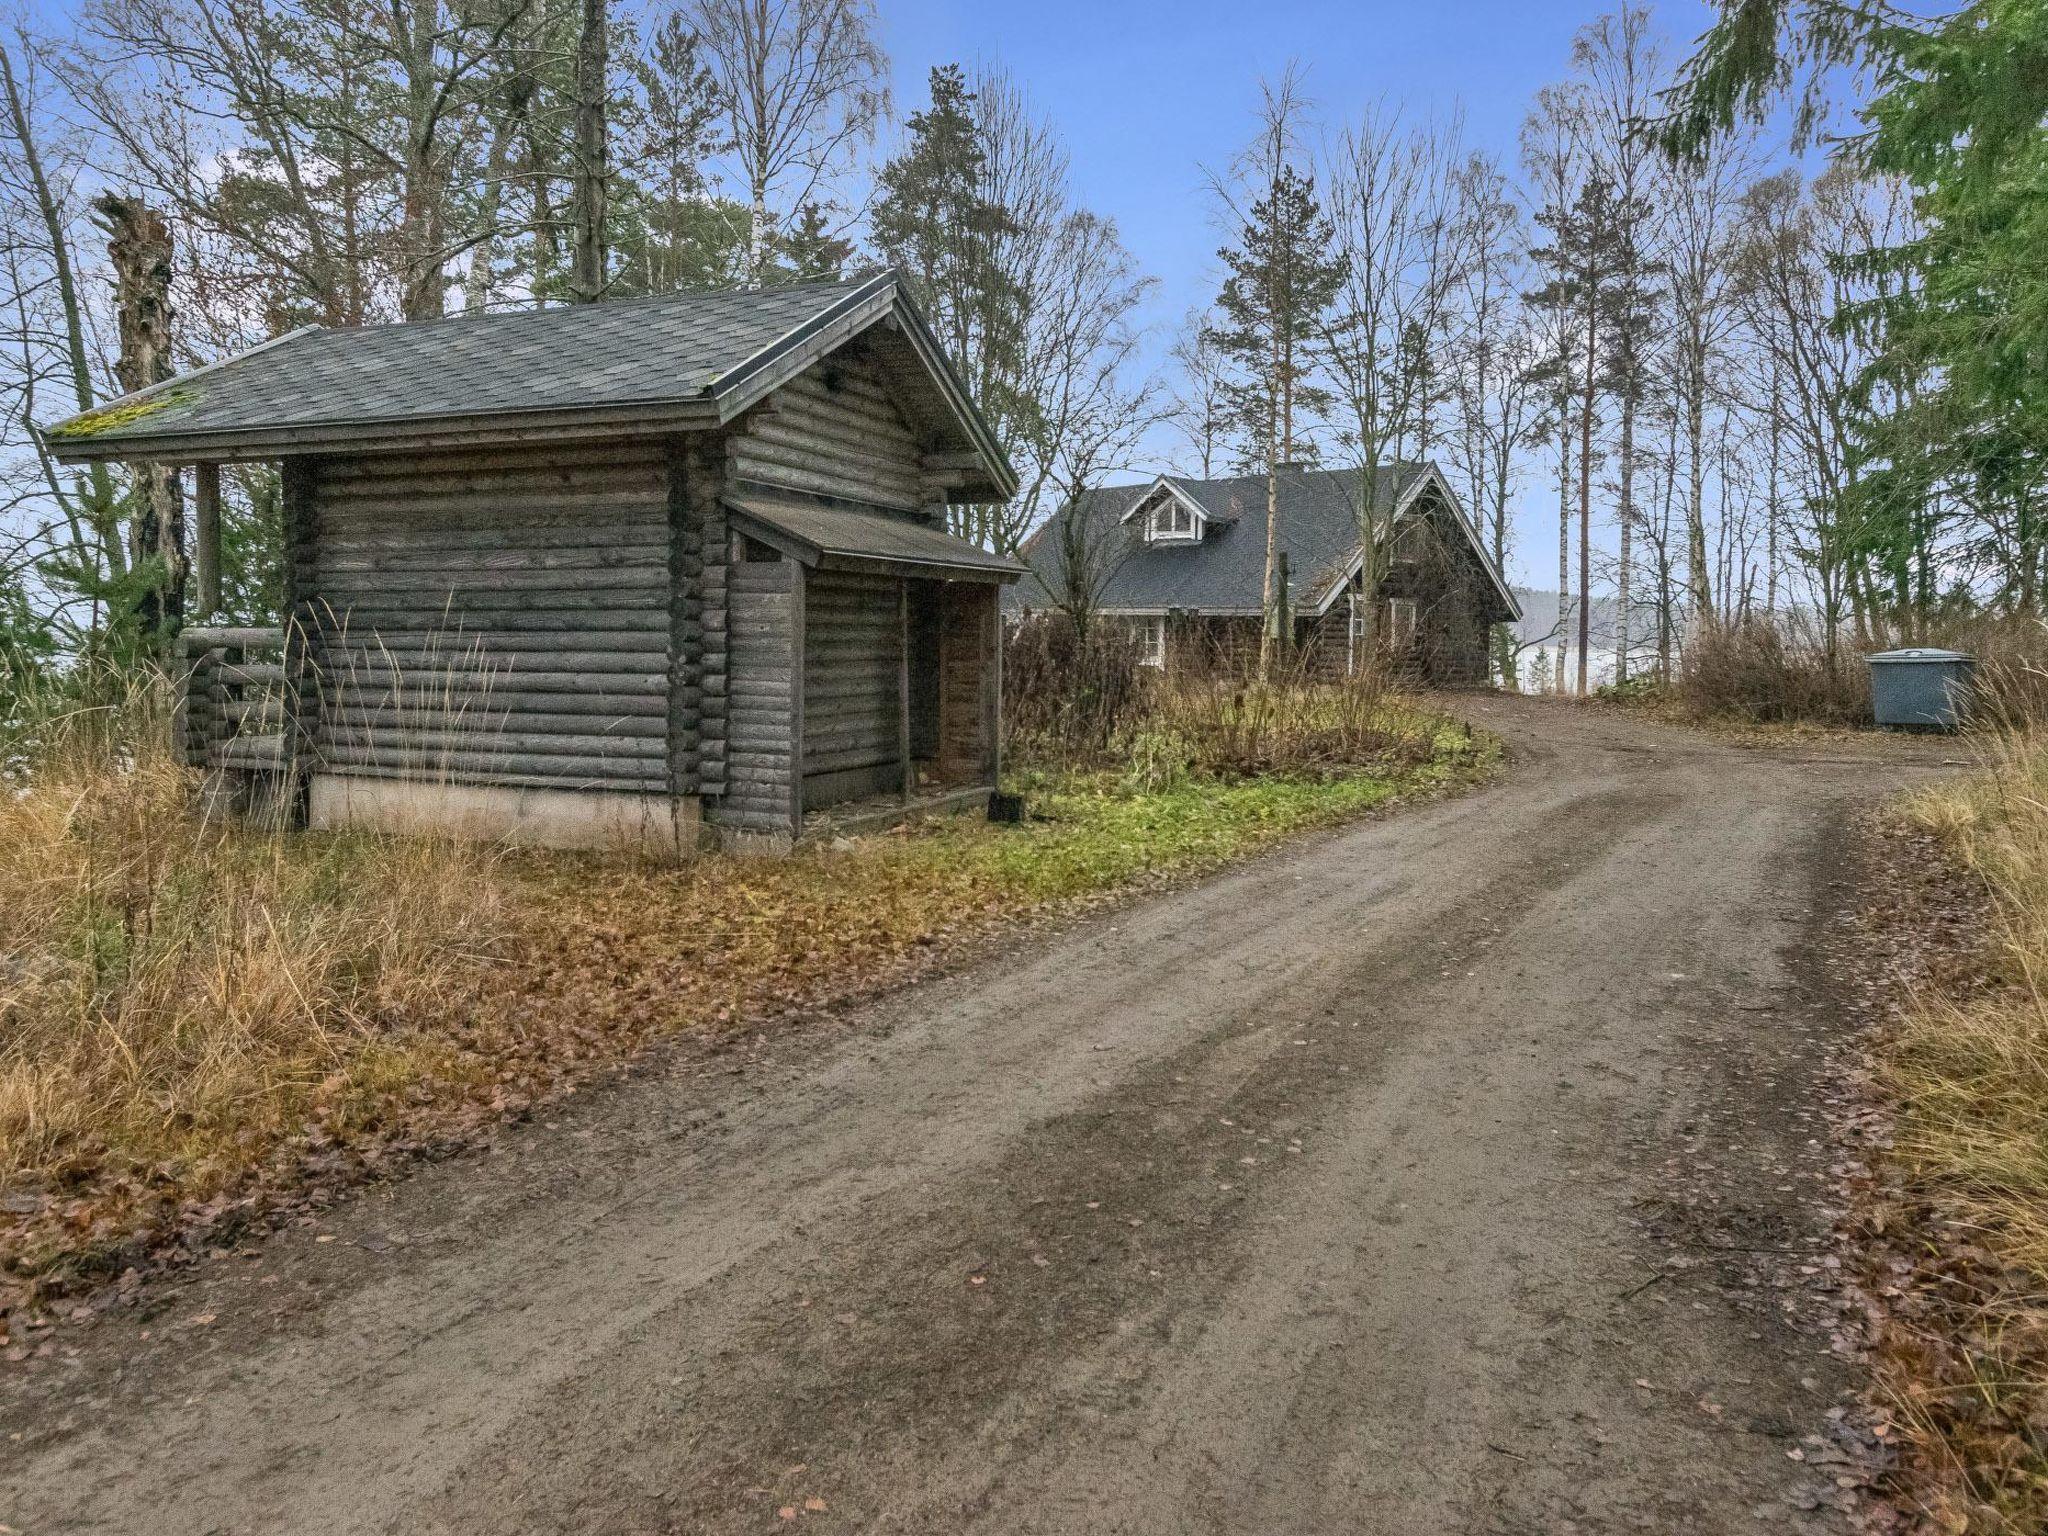 Photo 31 - Maison de 2 chambres à Hämeenlinna avec sauna